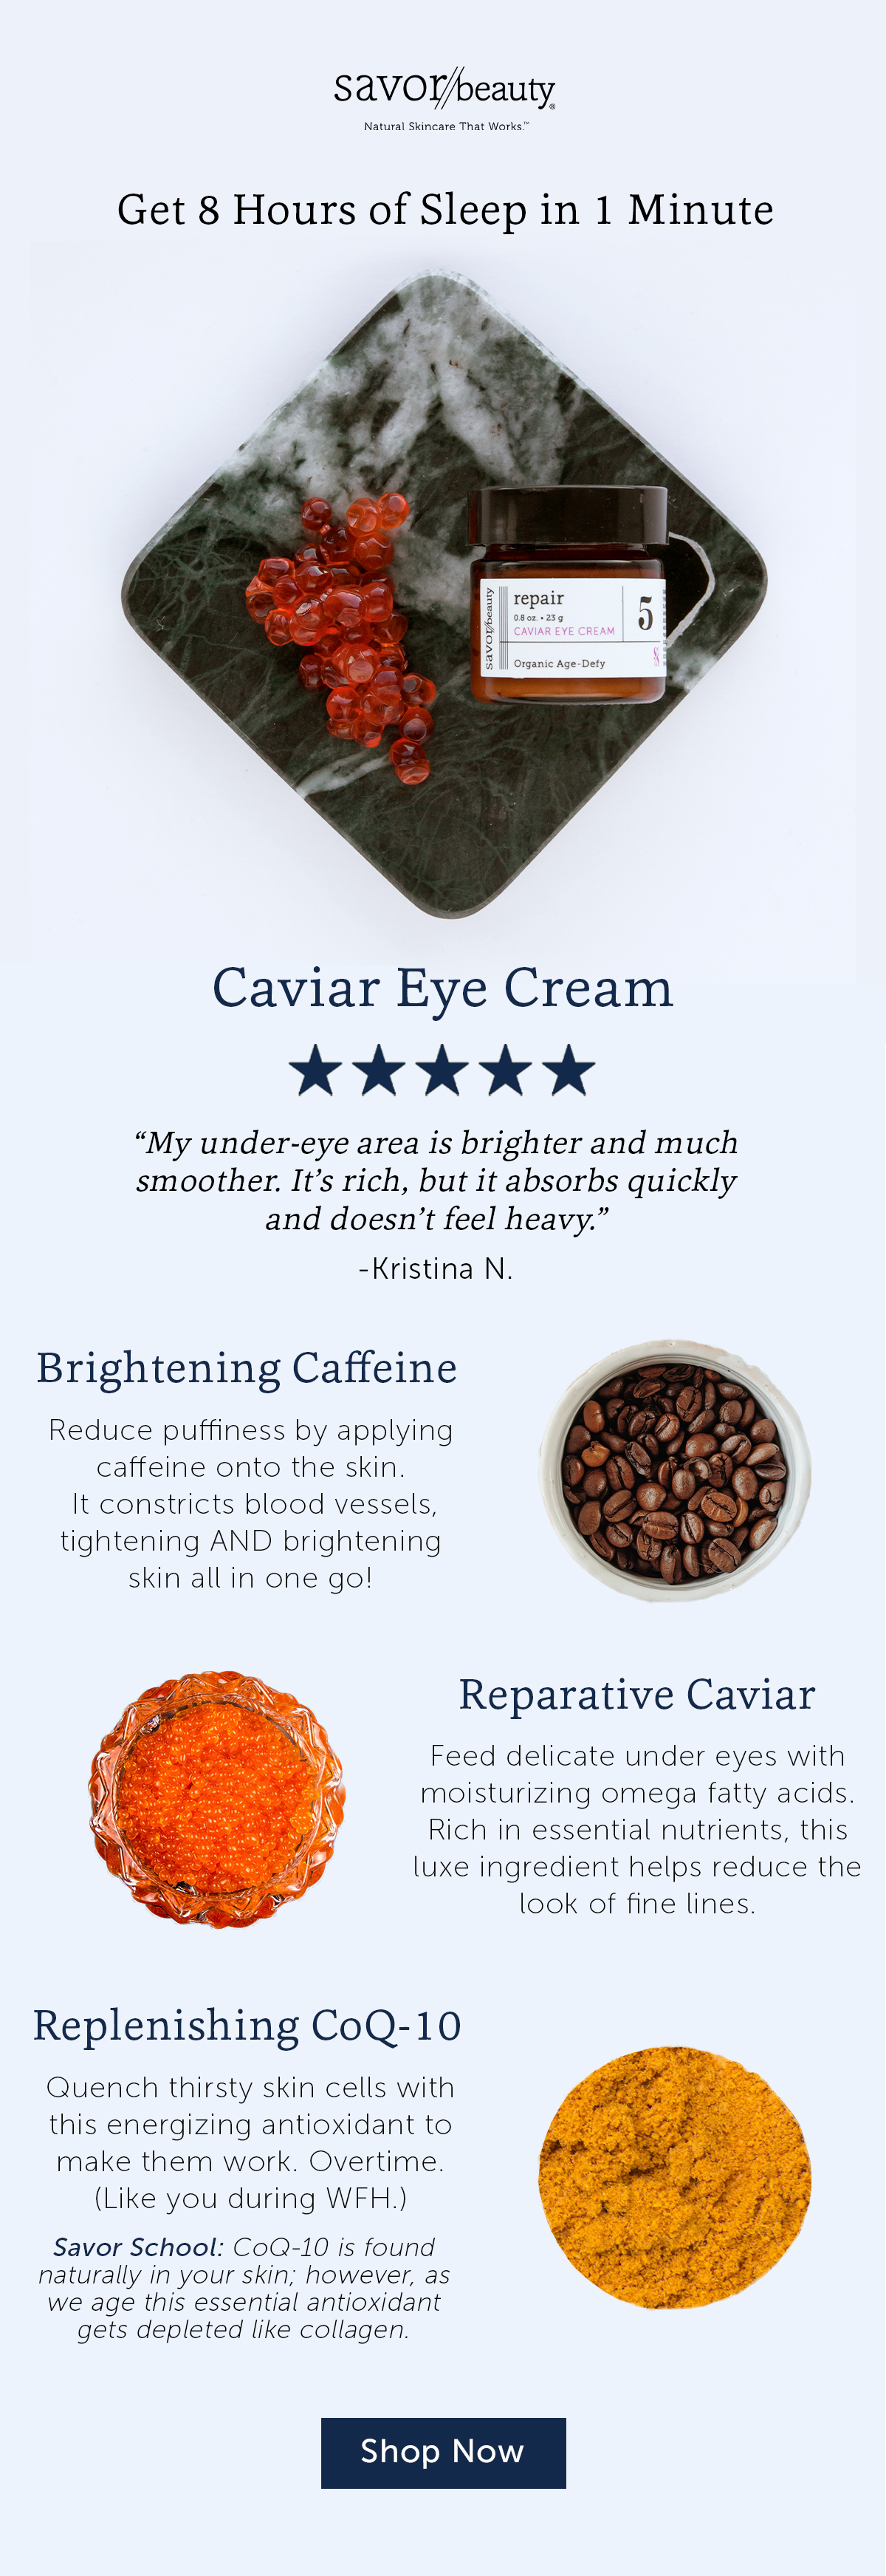 Caviar Eye Cream